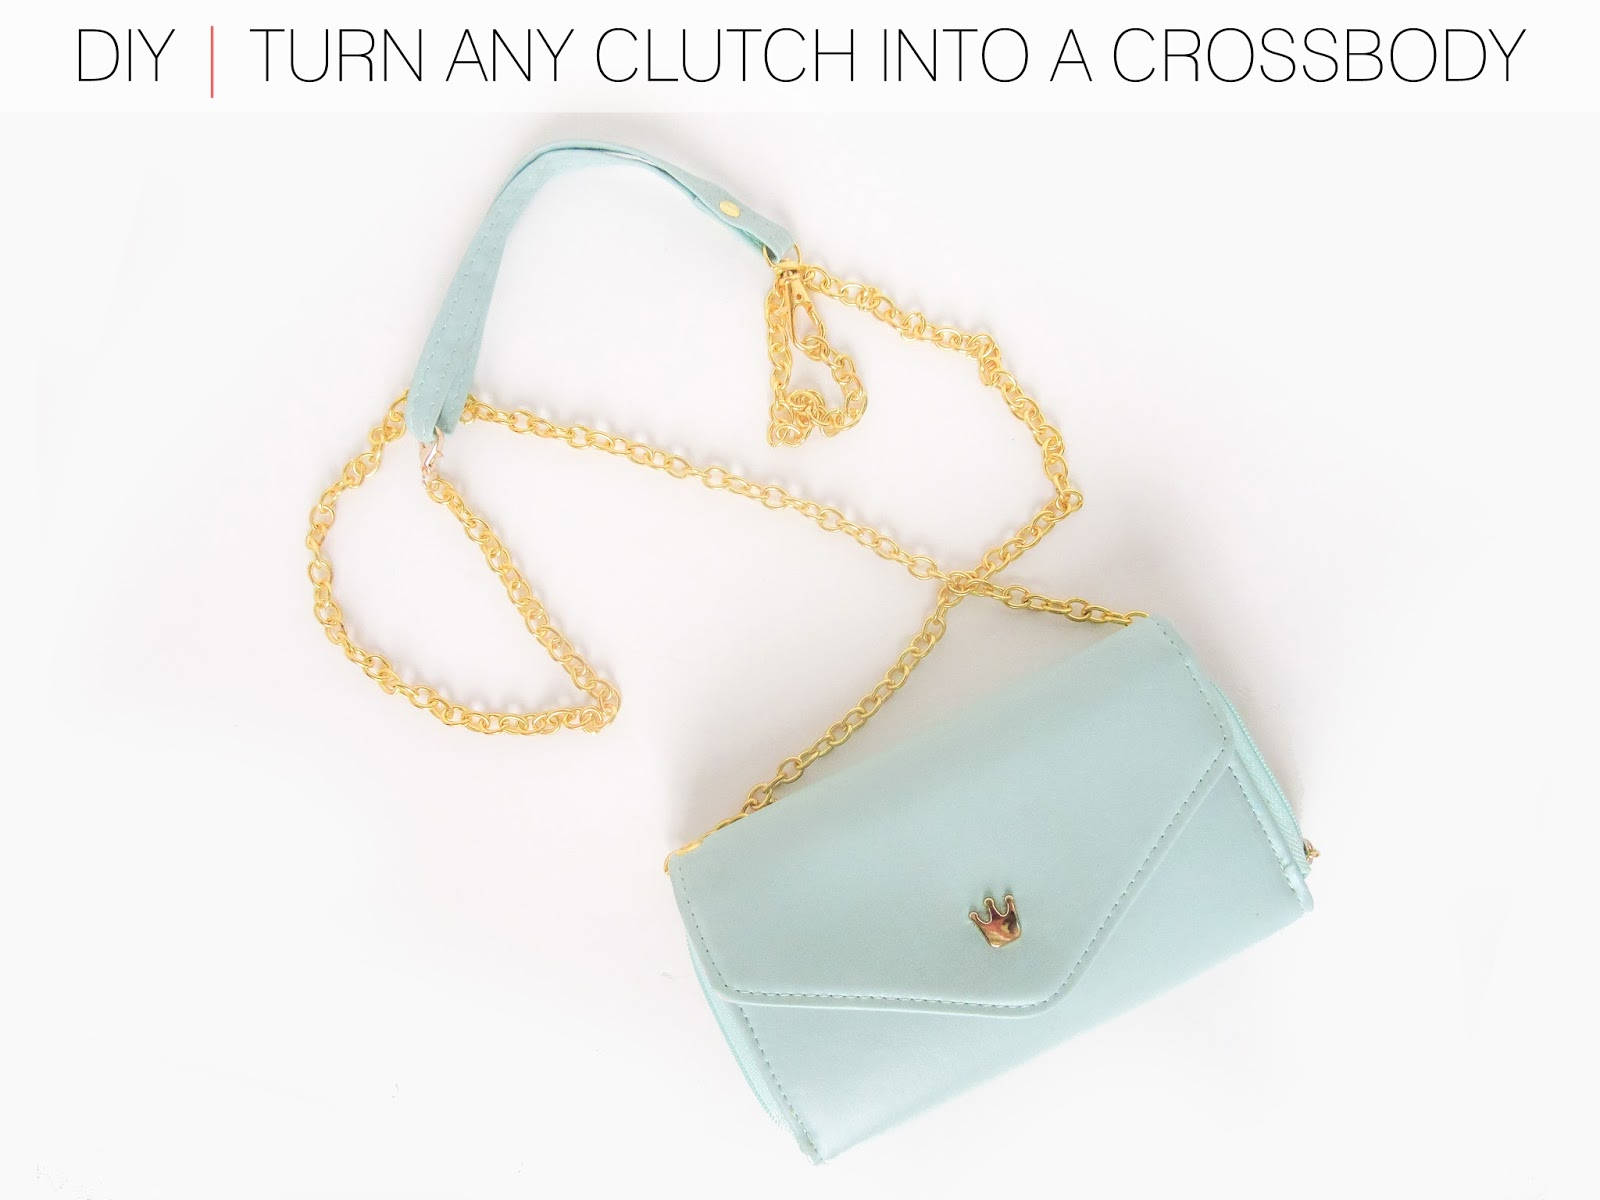 Turn Any Clutch Into A Crossbody